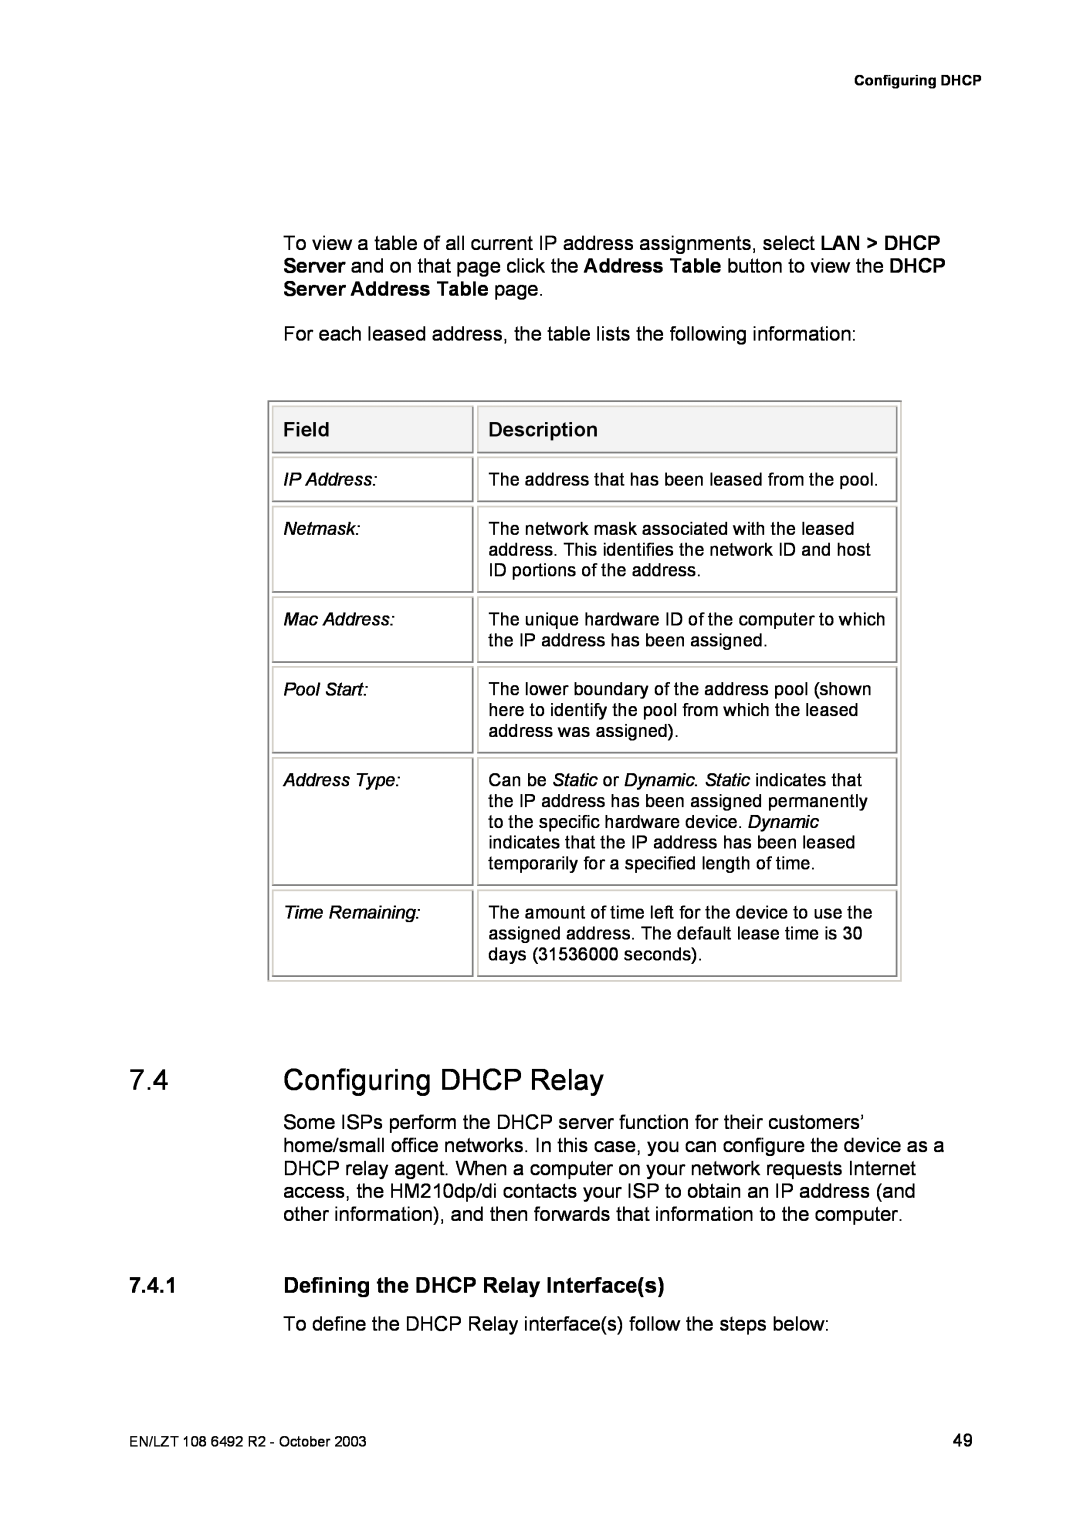 Garmin HM210DP/DI manual Configuring DHCP Relay, Defining the DHCP Relay Interfaces, Field, Description 